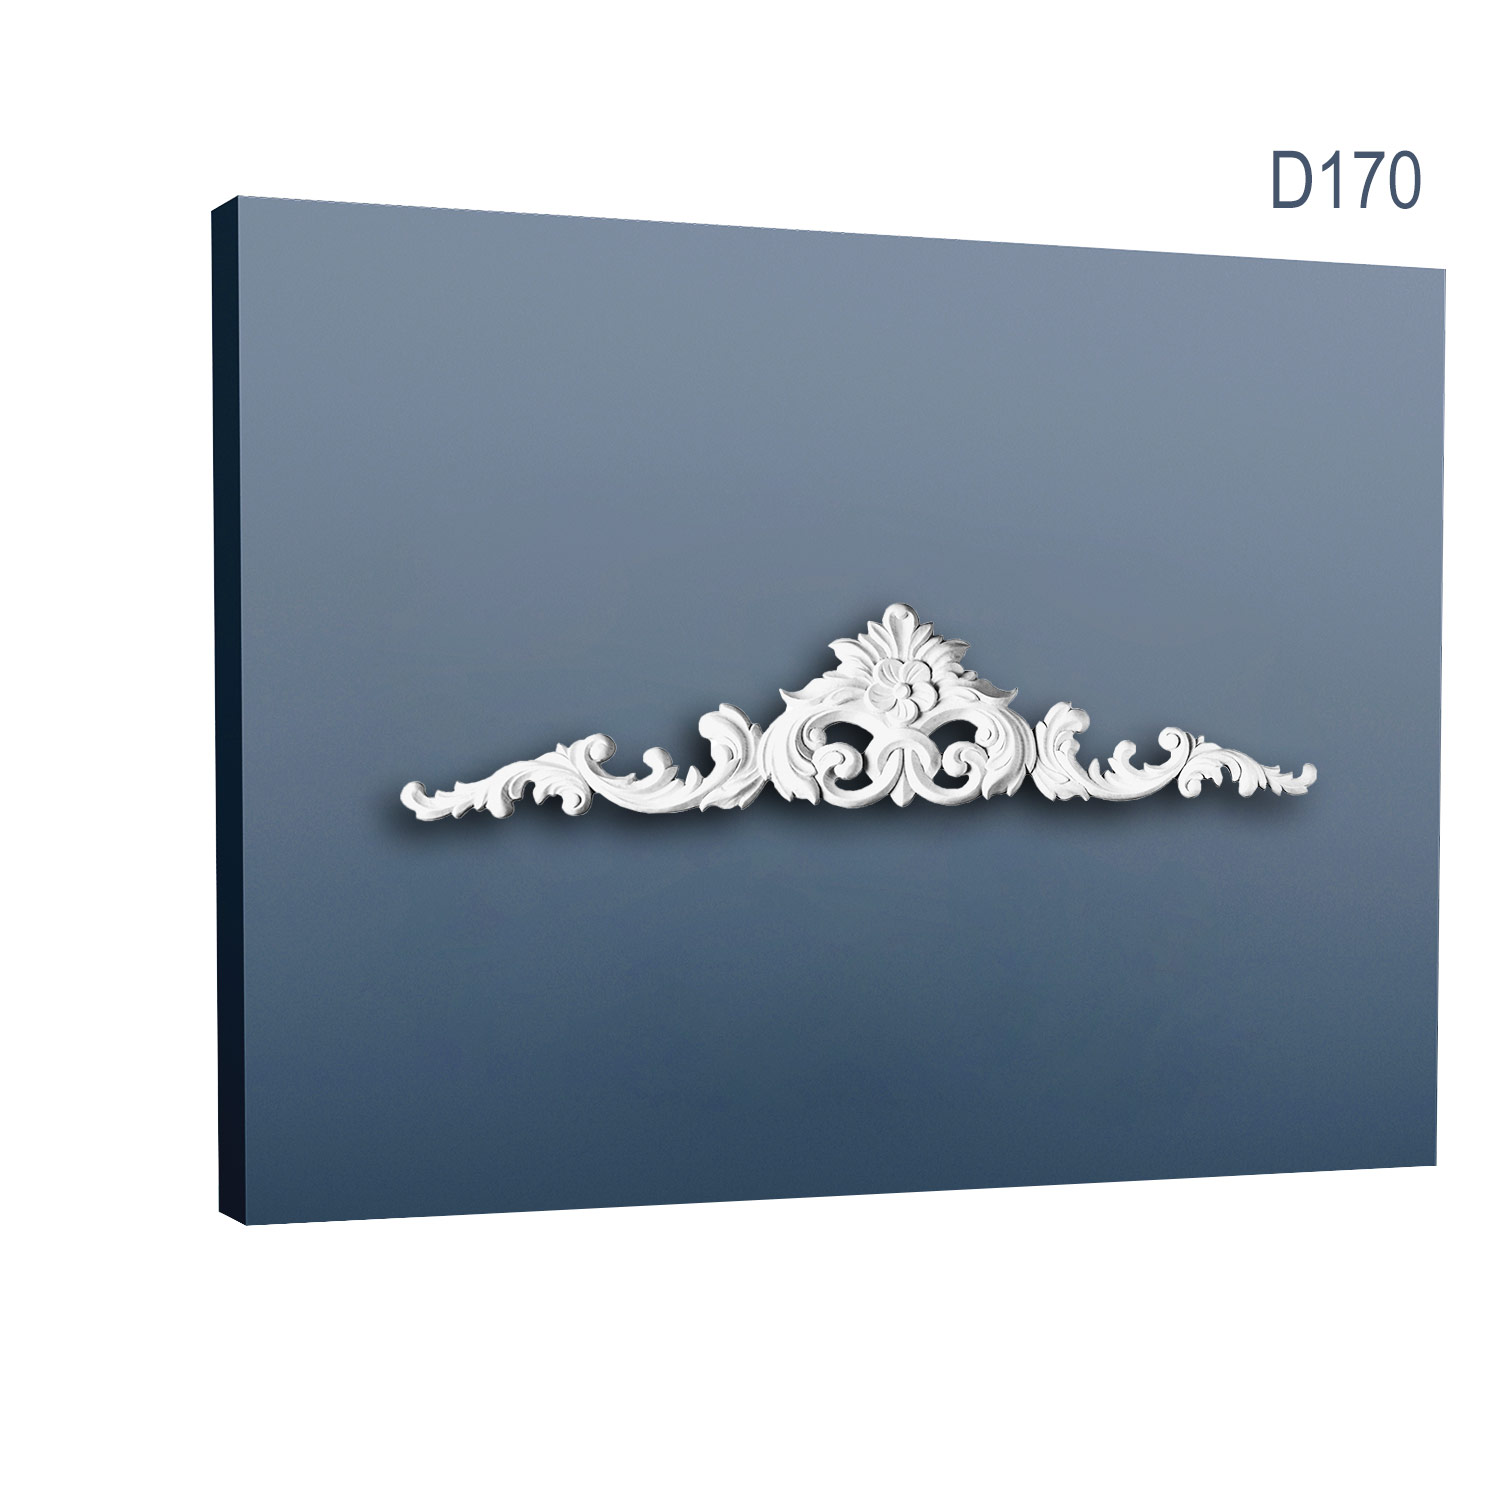 Fronton Luxxus D170, Dimensiuni: 105 X 24.5 X 3.2 cm, Orac Decor